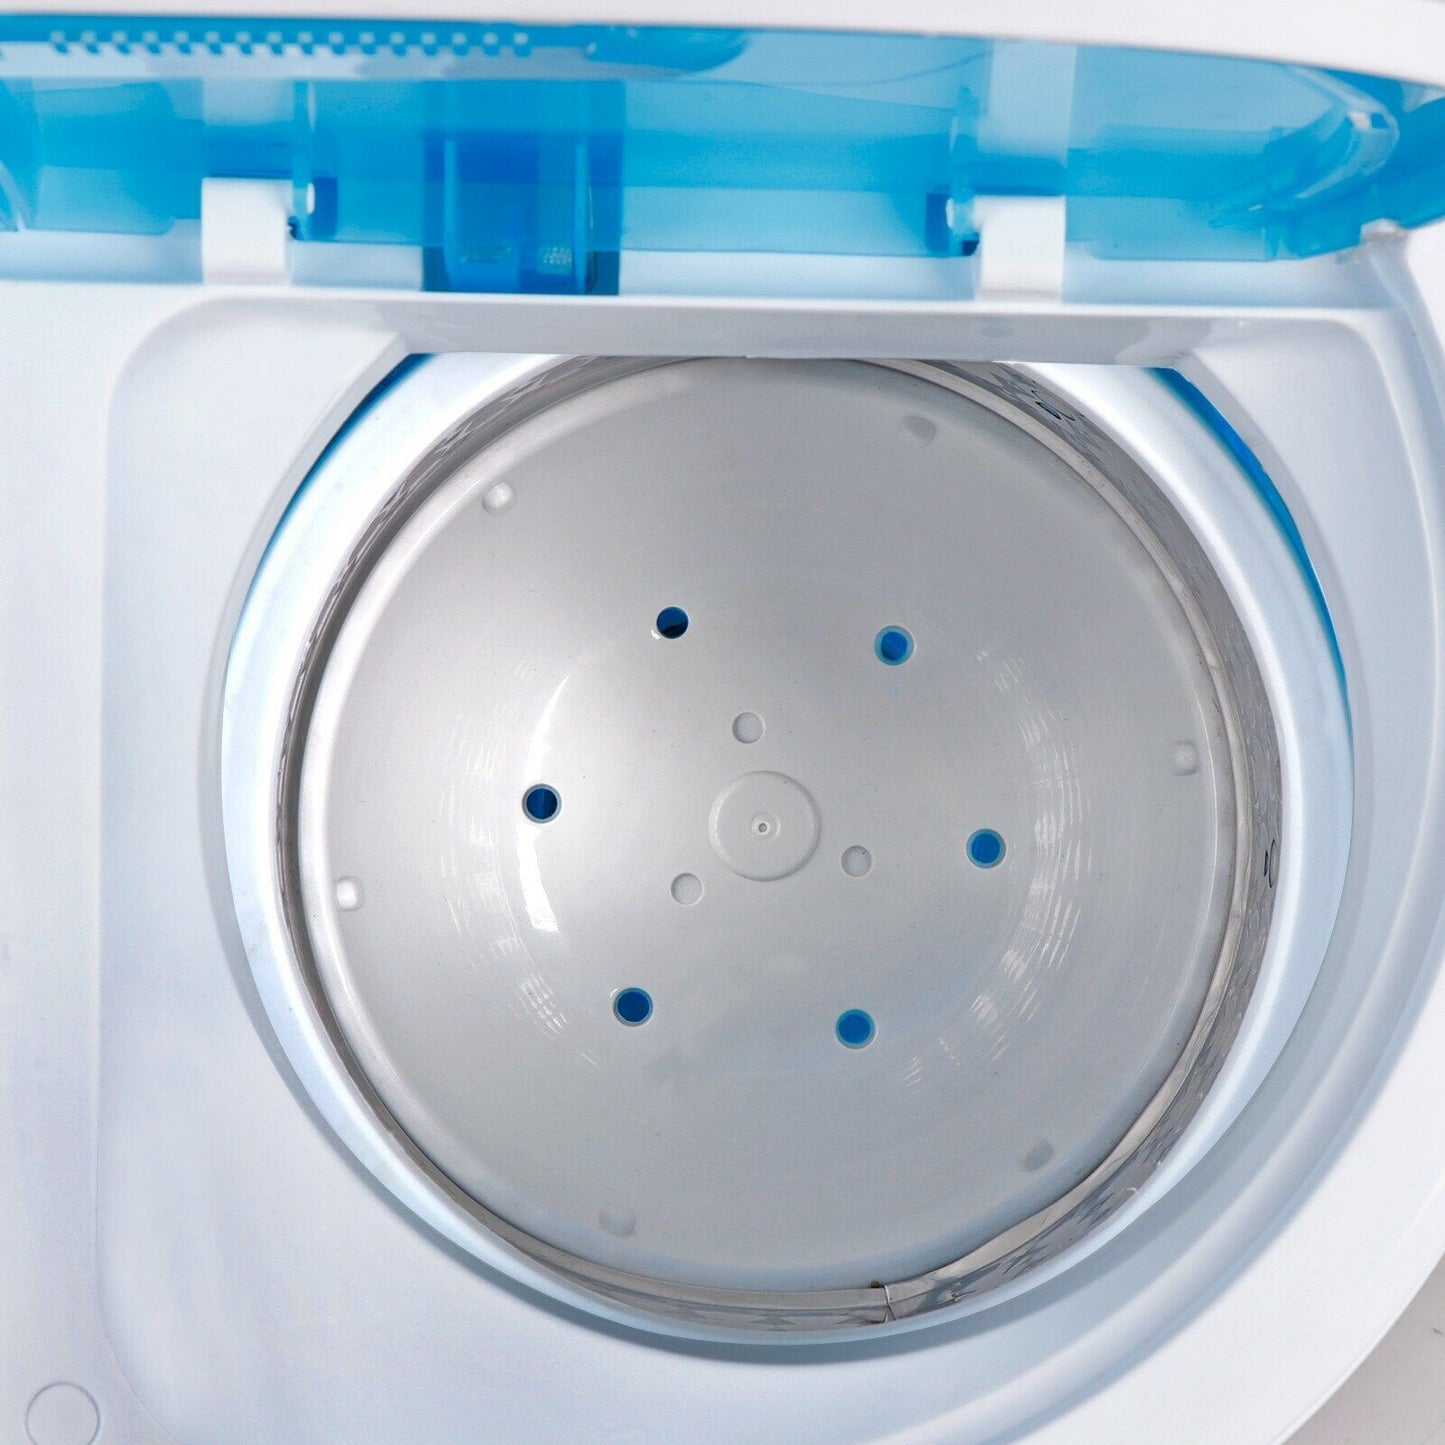 Compact Portable Twin Tub Washing Machine Top load 10lbs Washer Gravity Drain